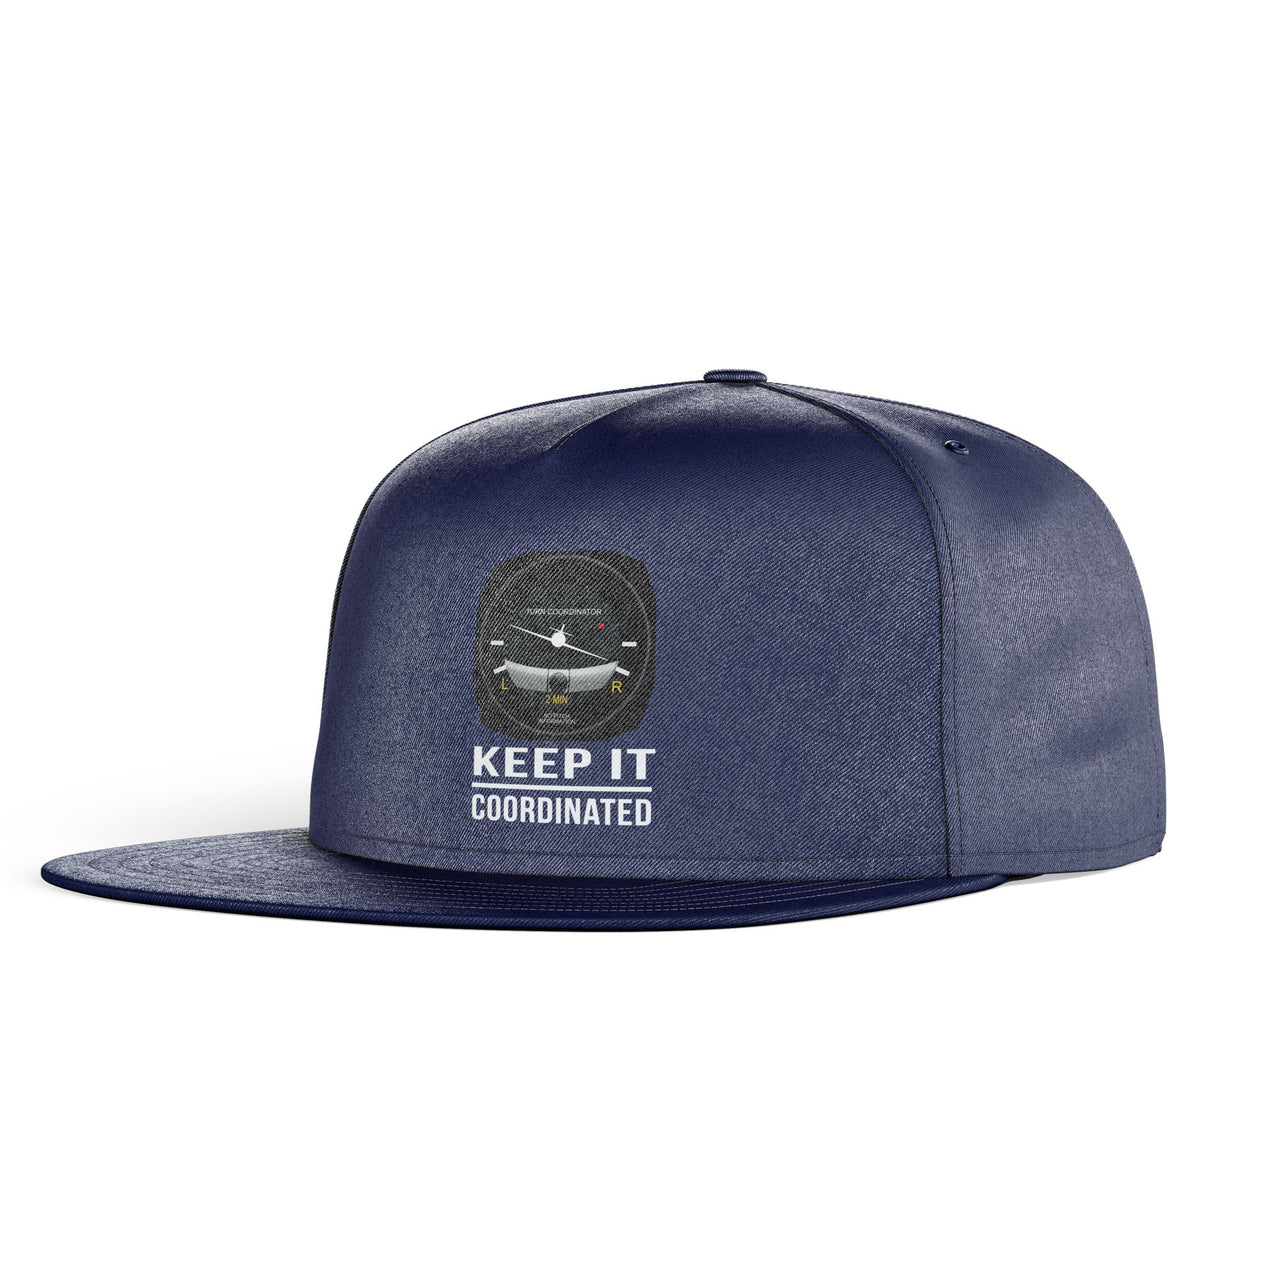 Keep It Coordinated Designed Snapback Caps & Hats